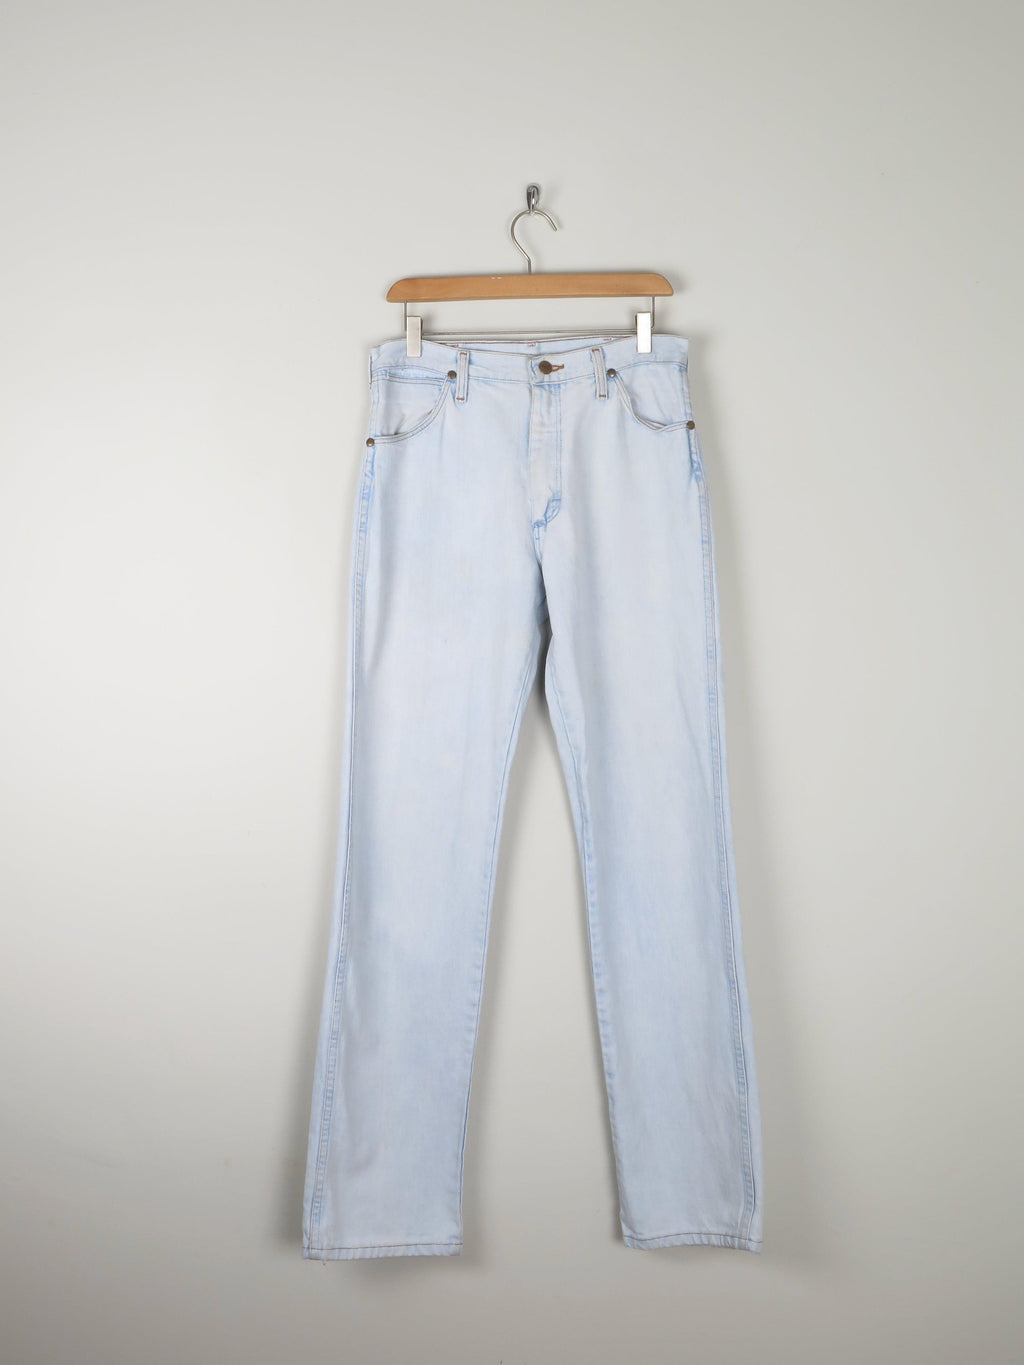 Vintage Wrangler Light Blue Jeans   30"/33" - The Harlequin